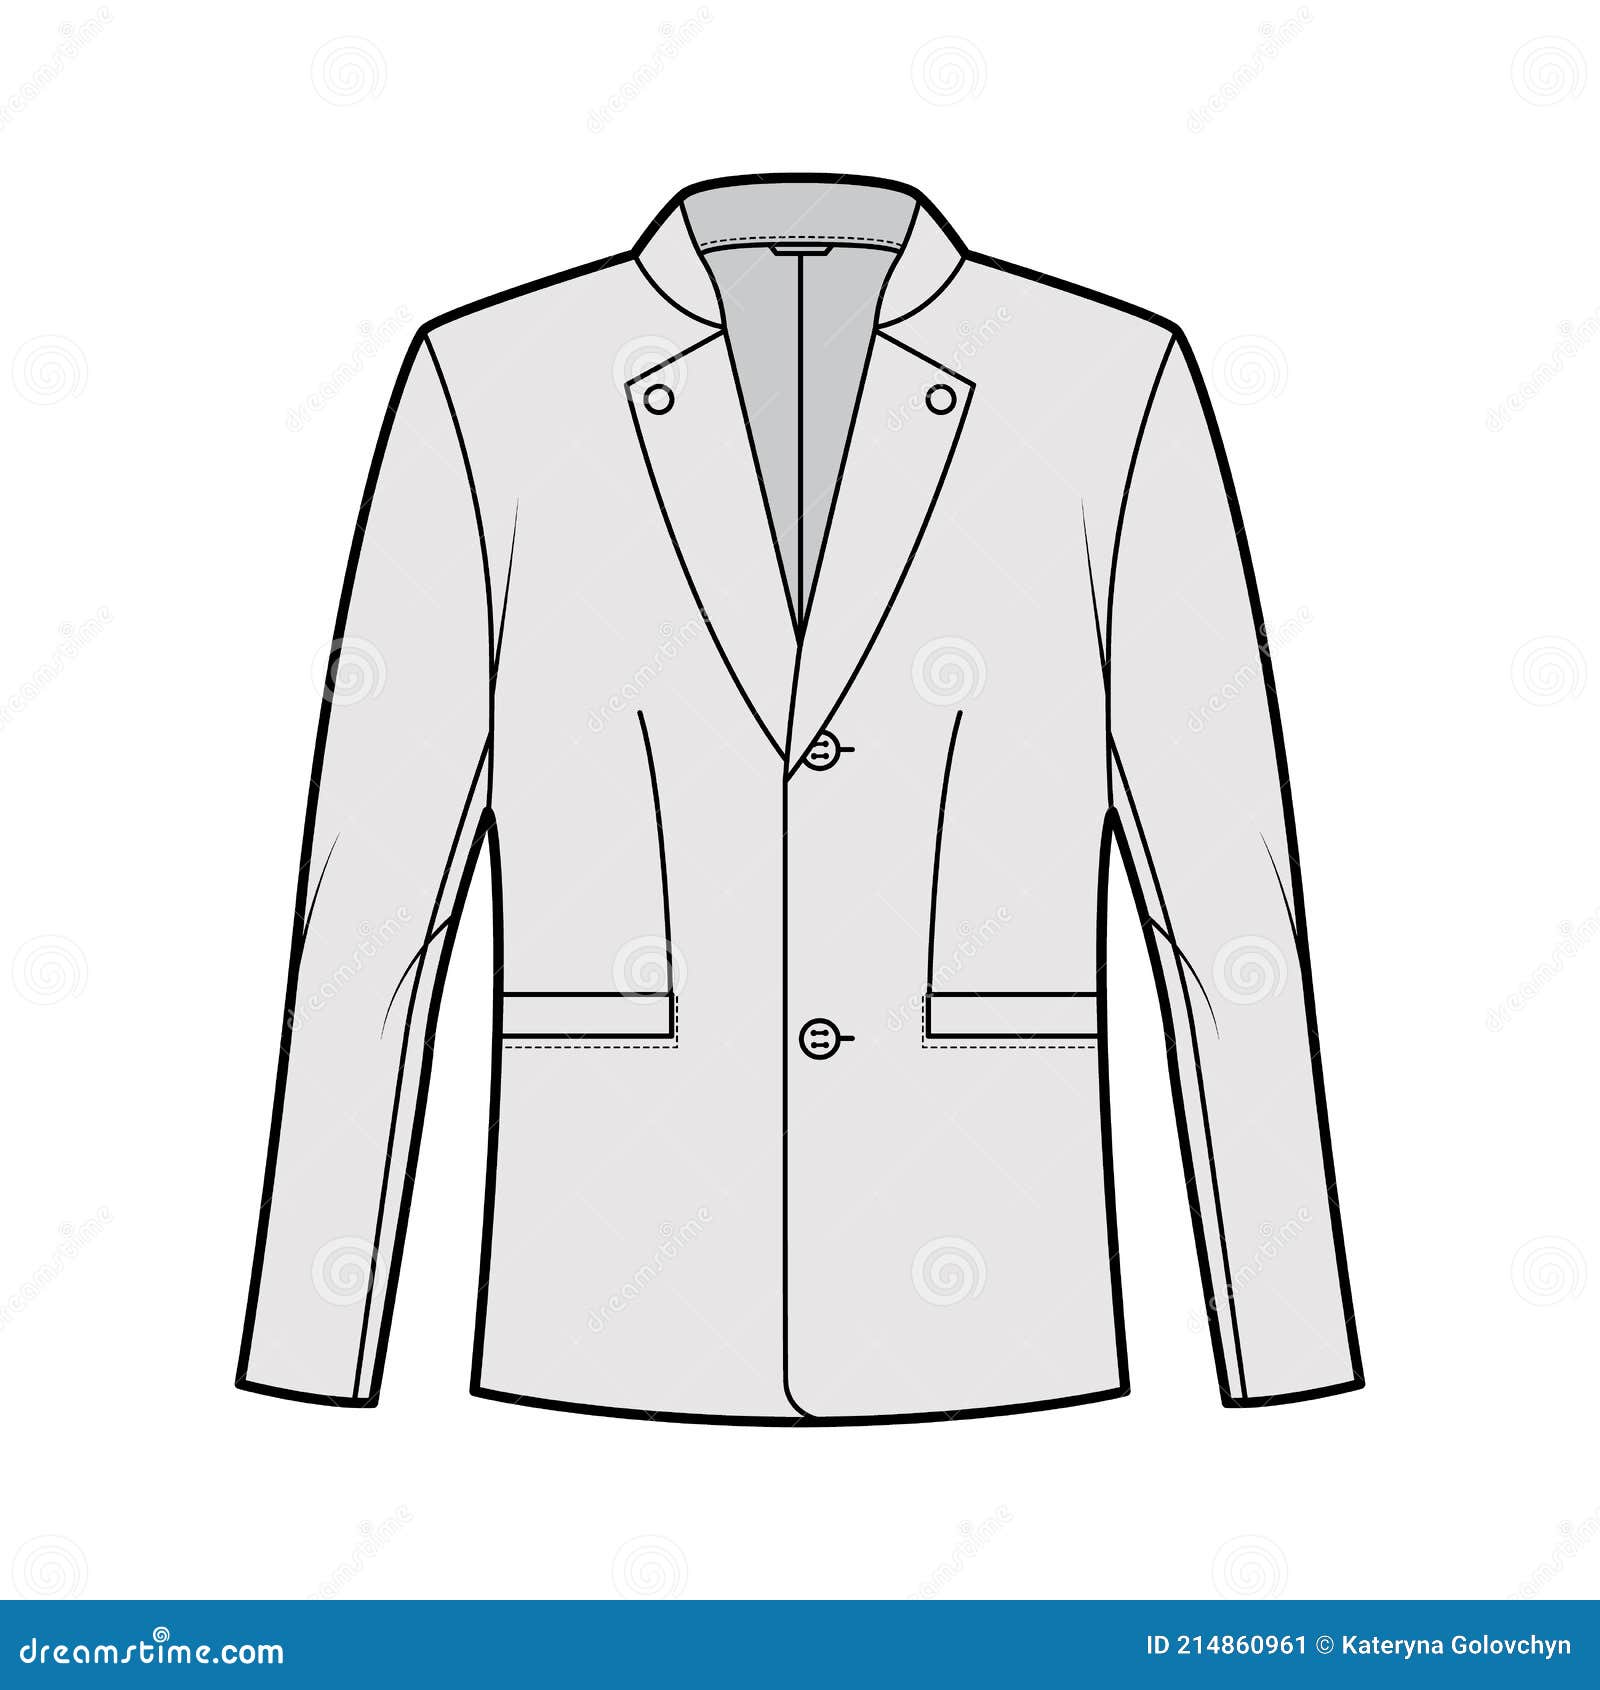 Tyrolean Jacket Tuxedo Technical Fashion Illustration with Long Sleeves ...